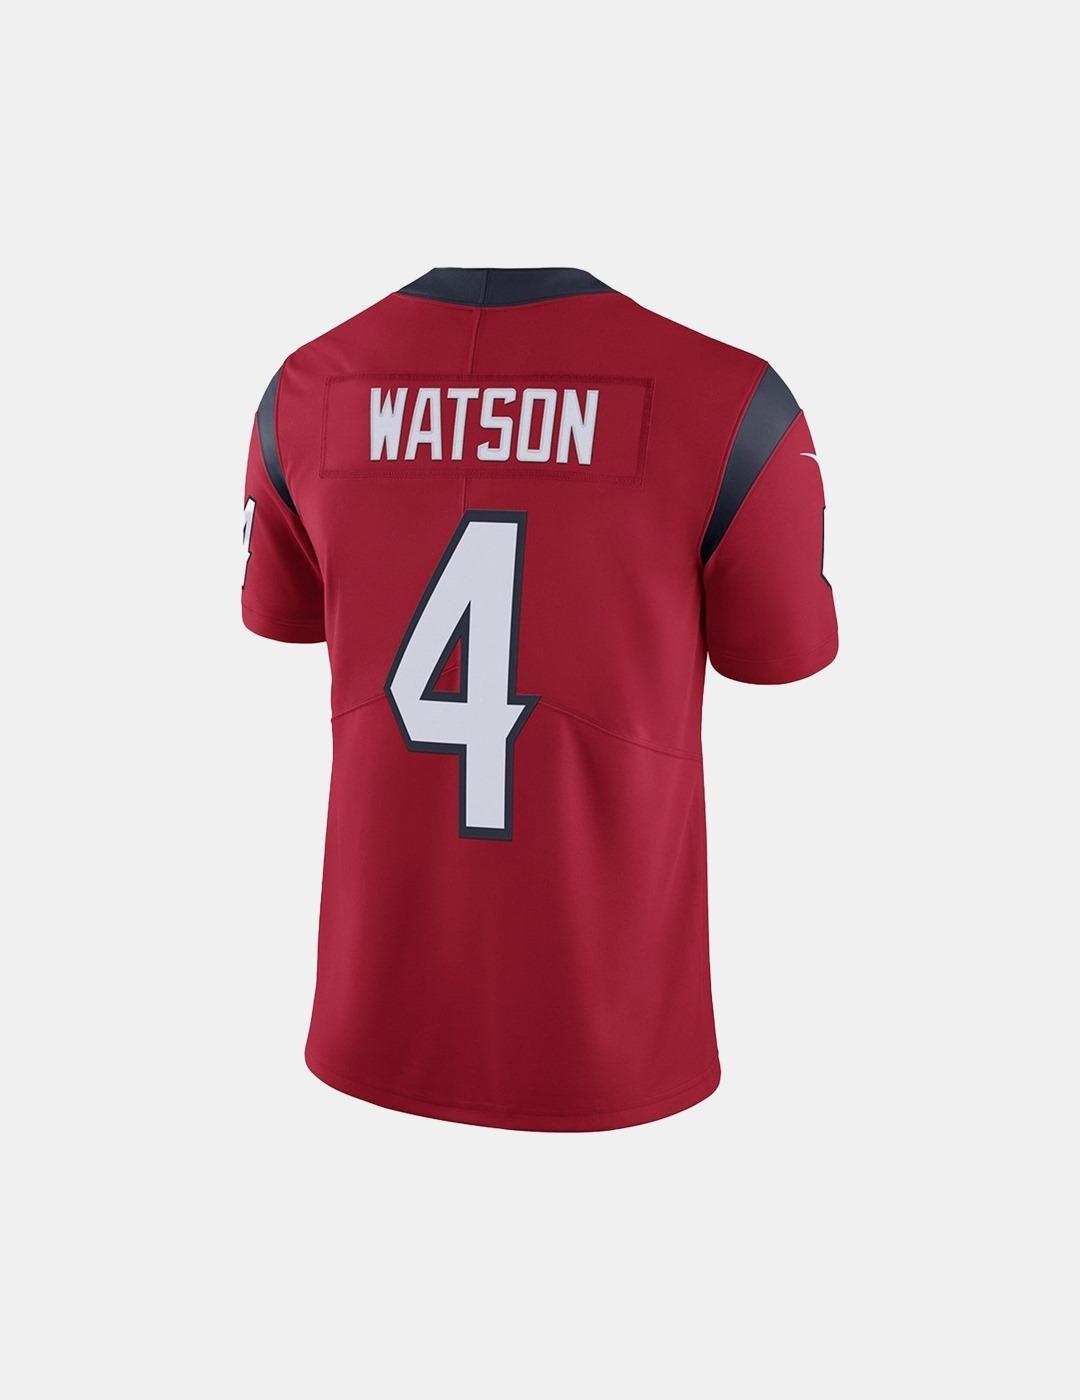 Camiseta Nike Nfl Houston Texans Watson